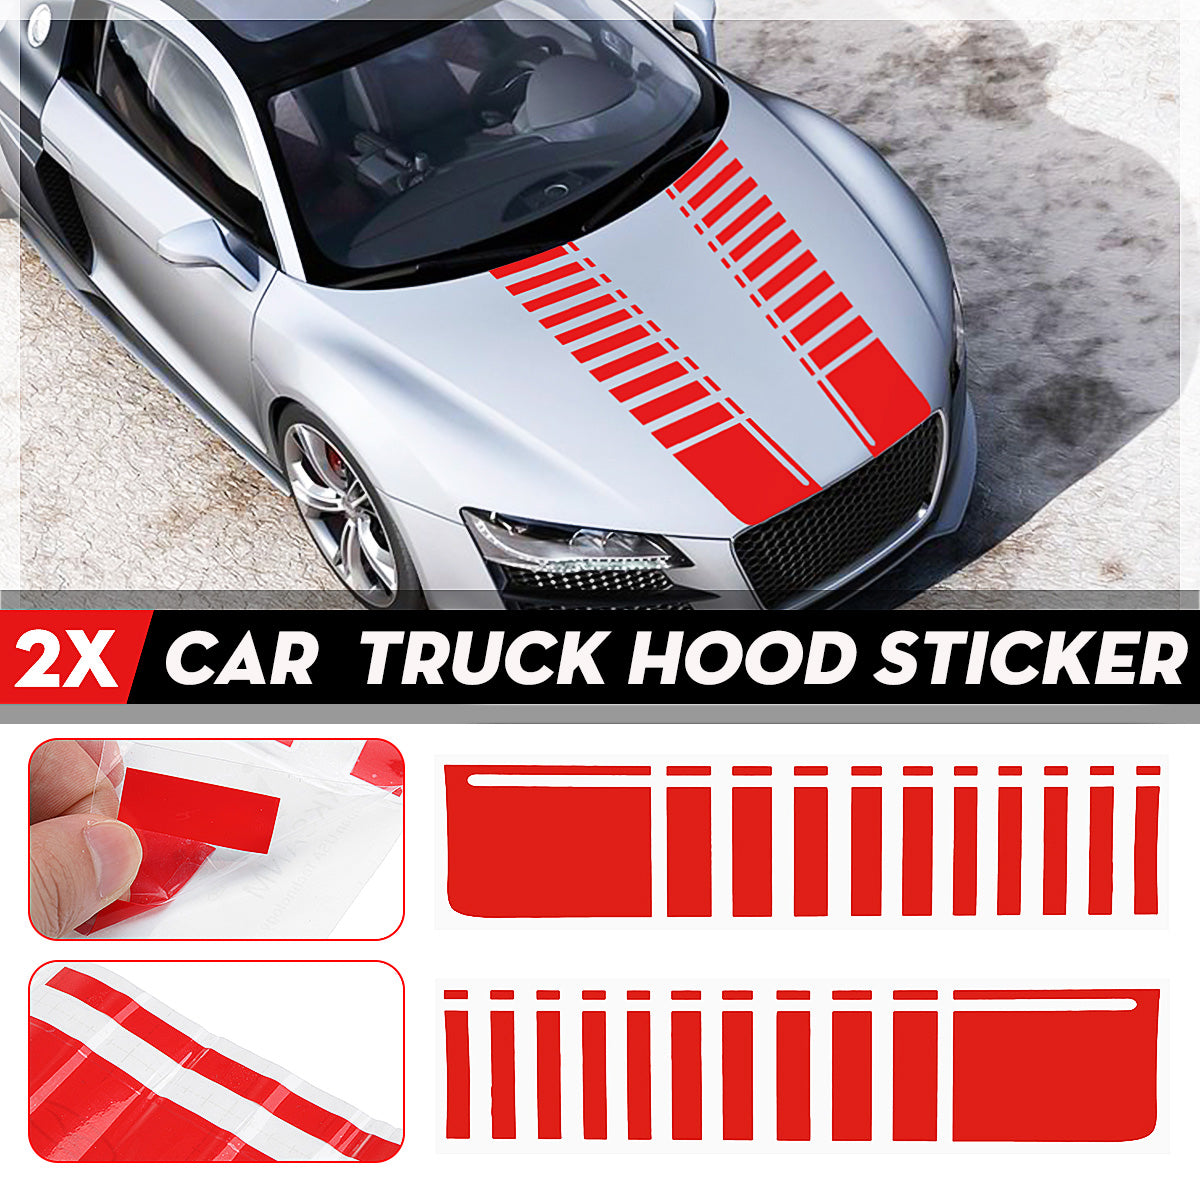 Firebrick 2PCS Universal Auto Car Truck Hood Bonnet Stripe Sticker Decal Vinyl Racing Sport